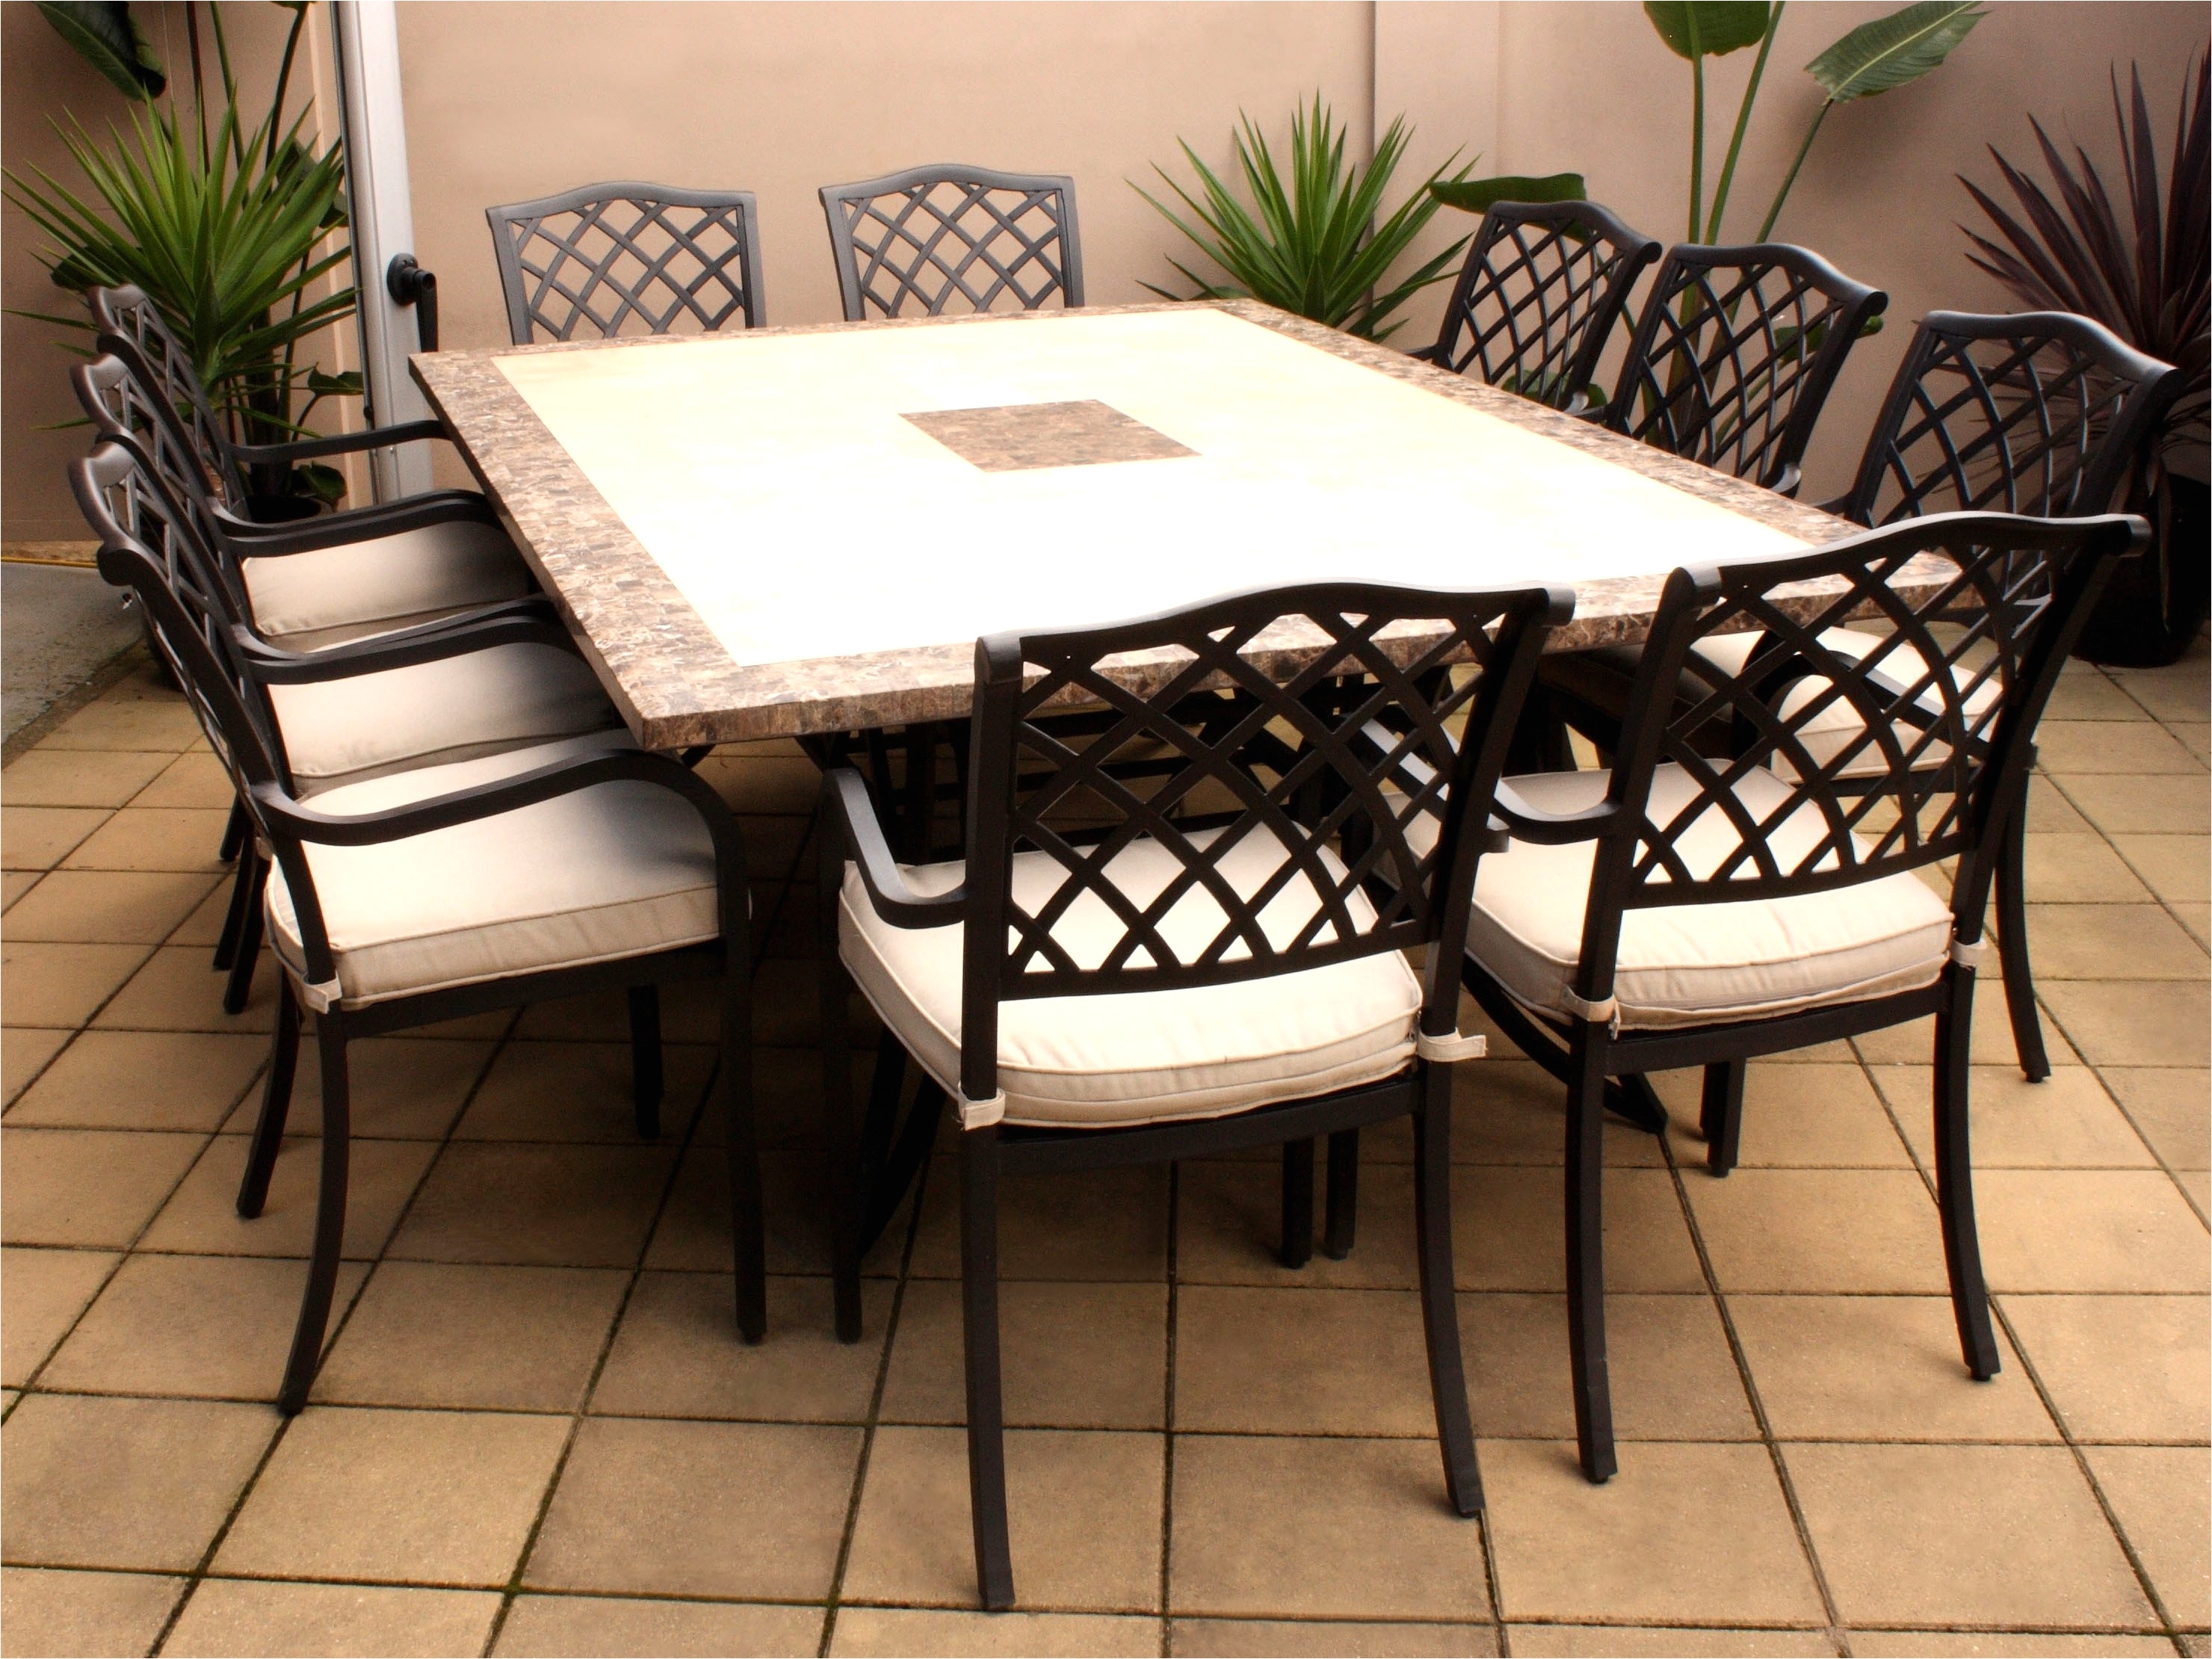 25 fresh outdoor furniture repairs melbourne 25 fresh outdoor furniture repairs melbourne